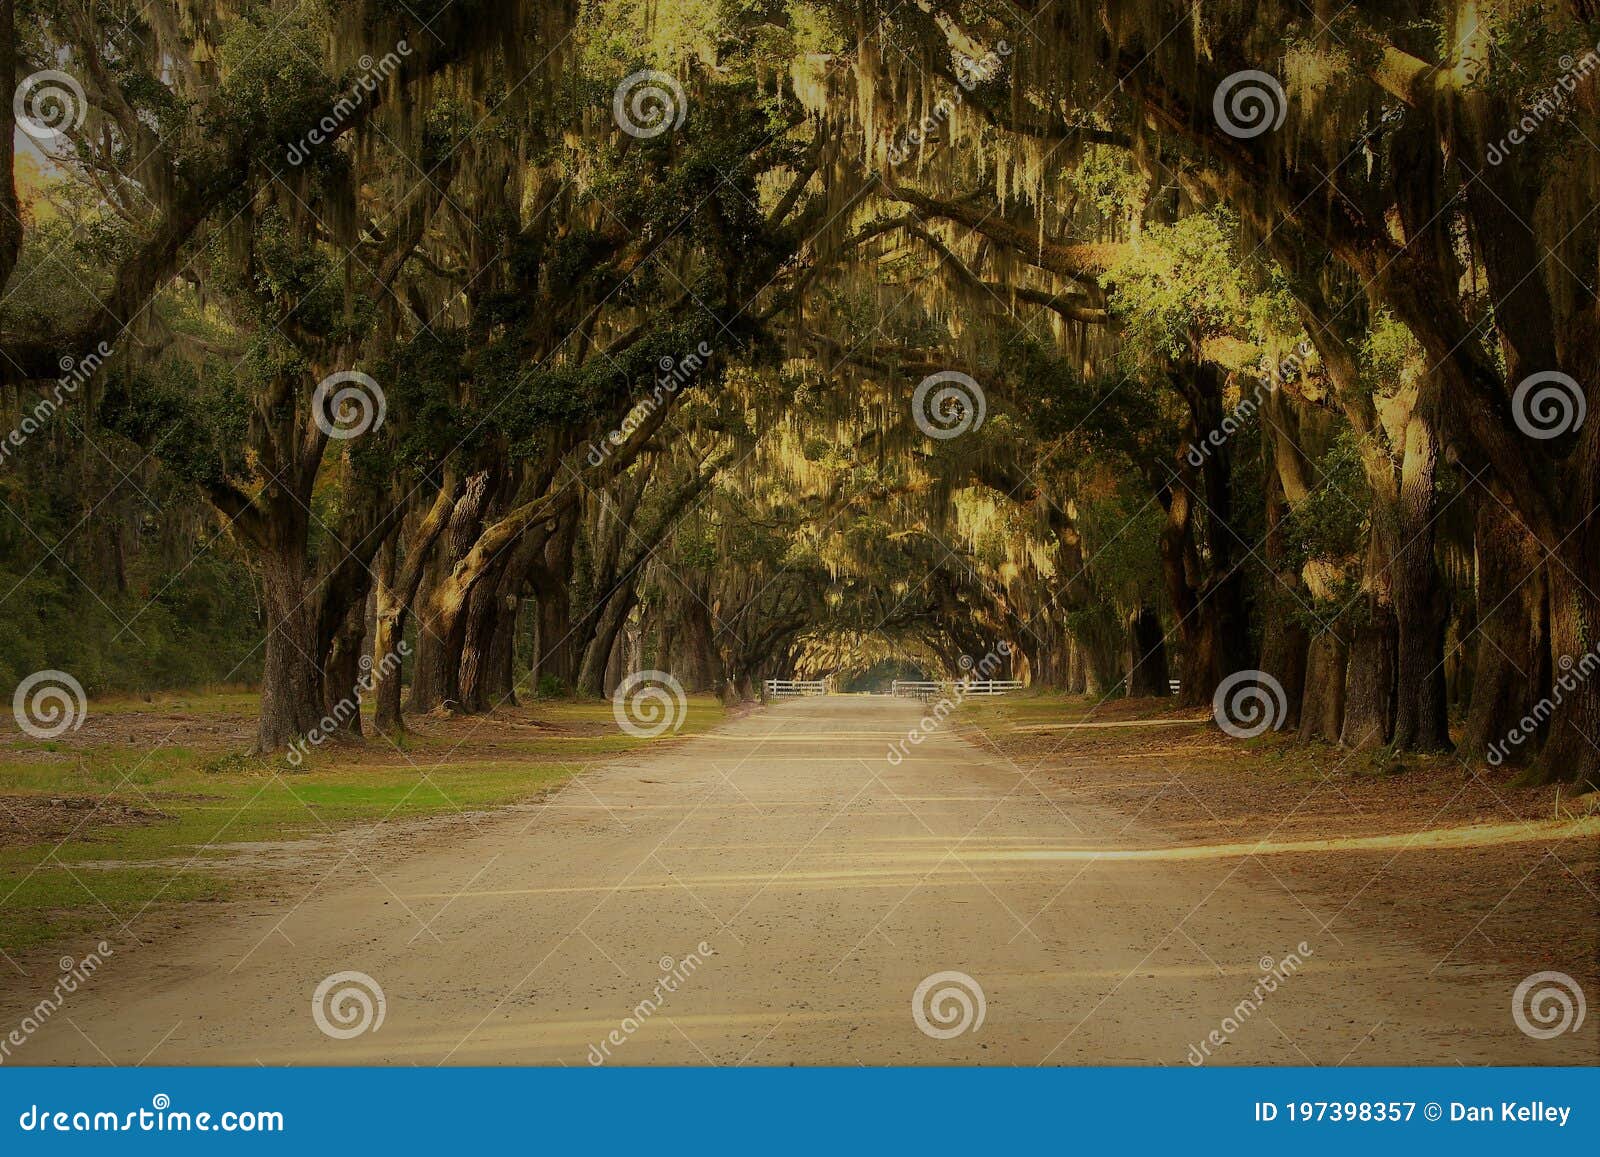 wormsloe plantation road through the trees near savannah, georgia, in the southeastern united states.